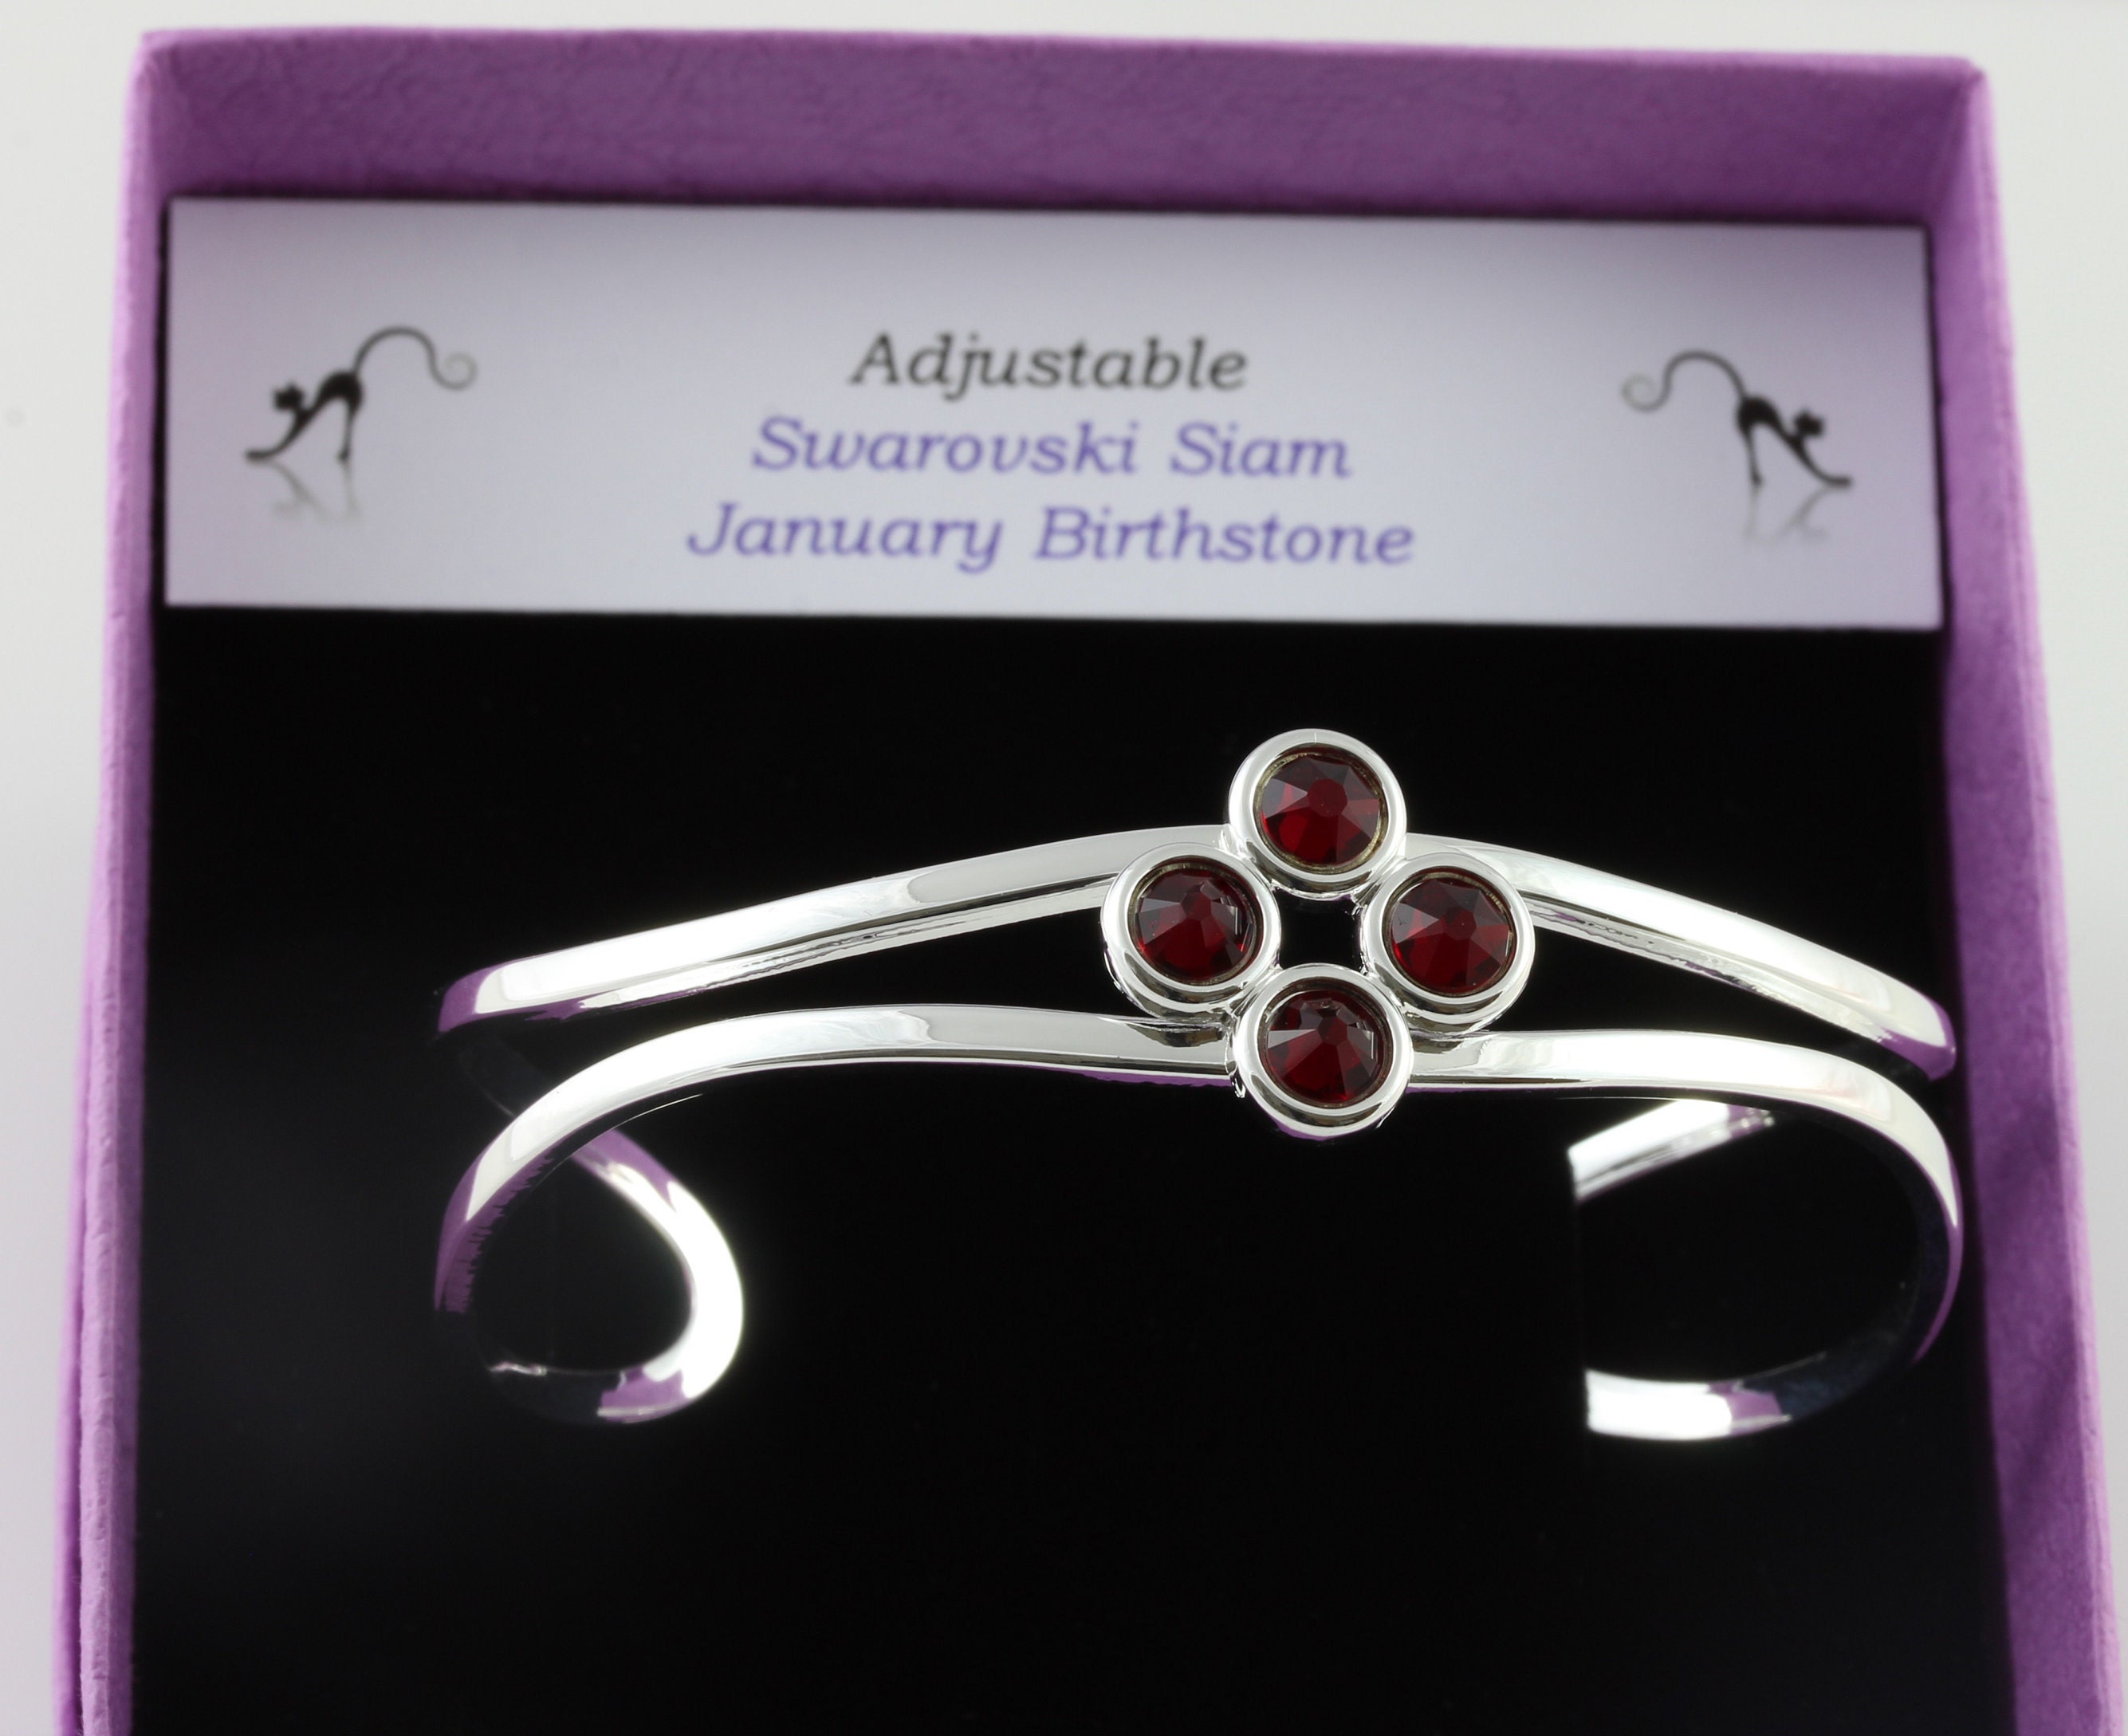 January Birthstone Swarovski Siam Crystal Adjustable/Expandable Cuff Bangle